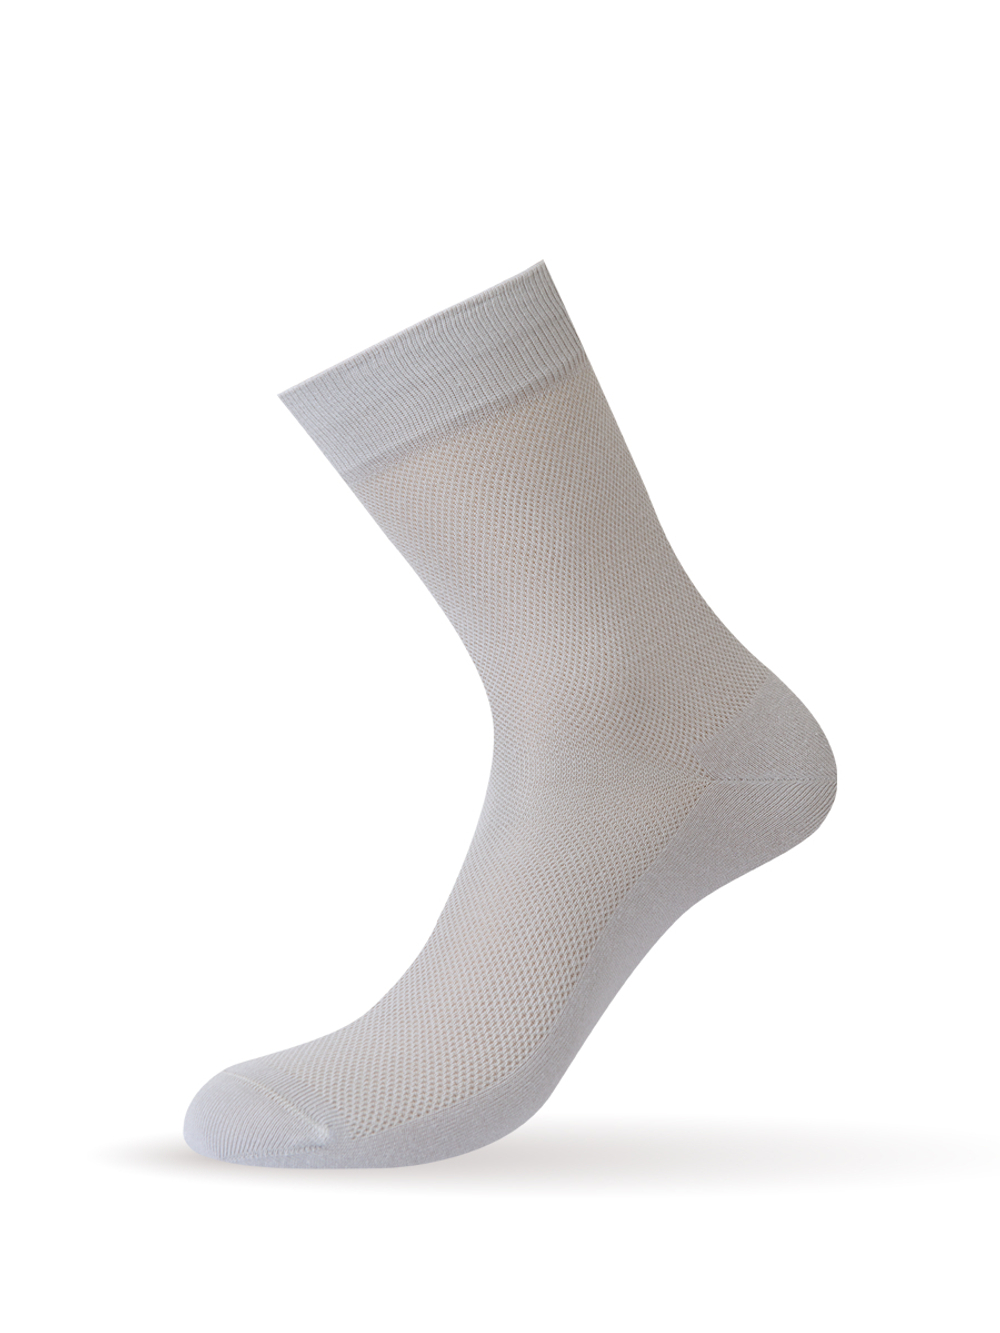 OMSA ACTIVE 103 (мужские носки)